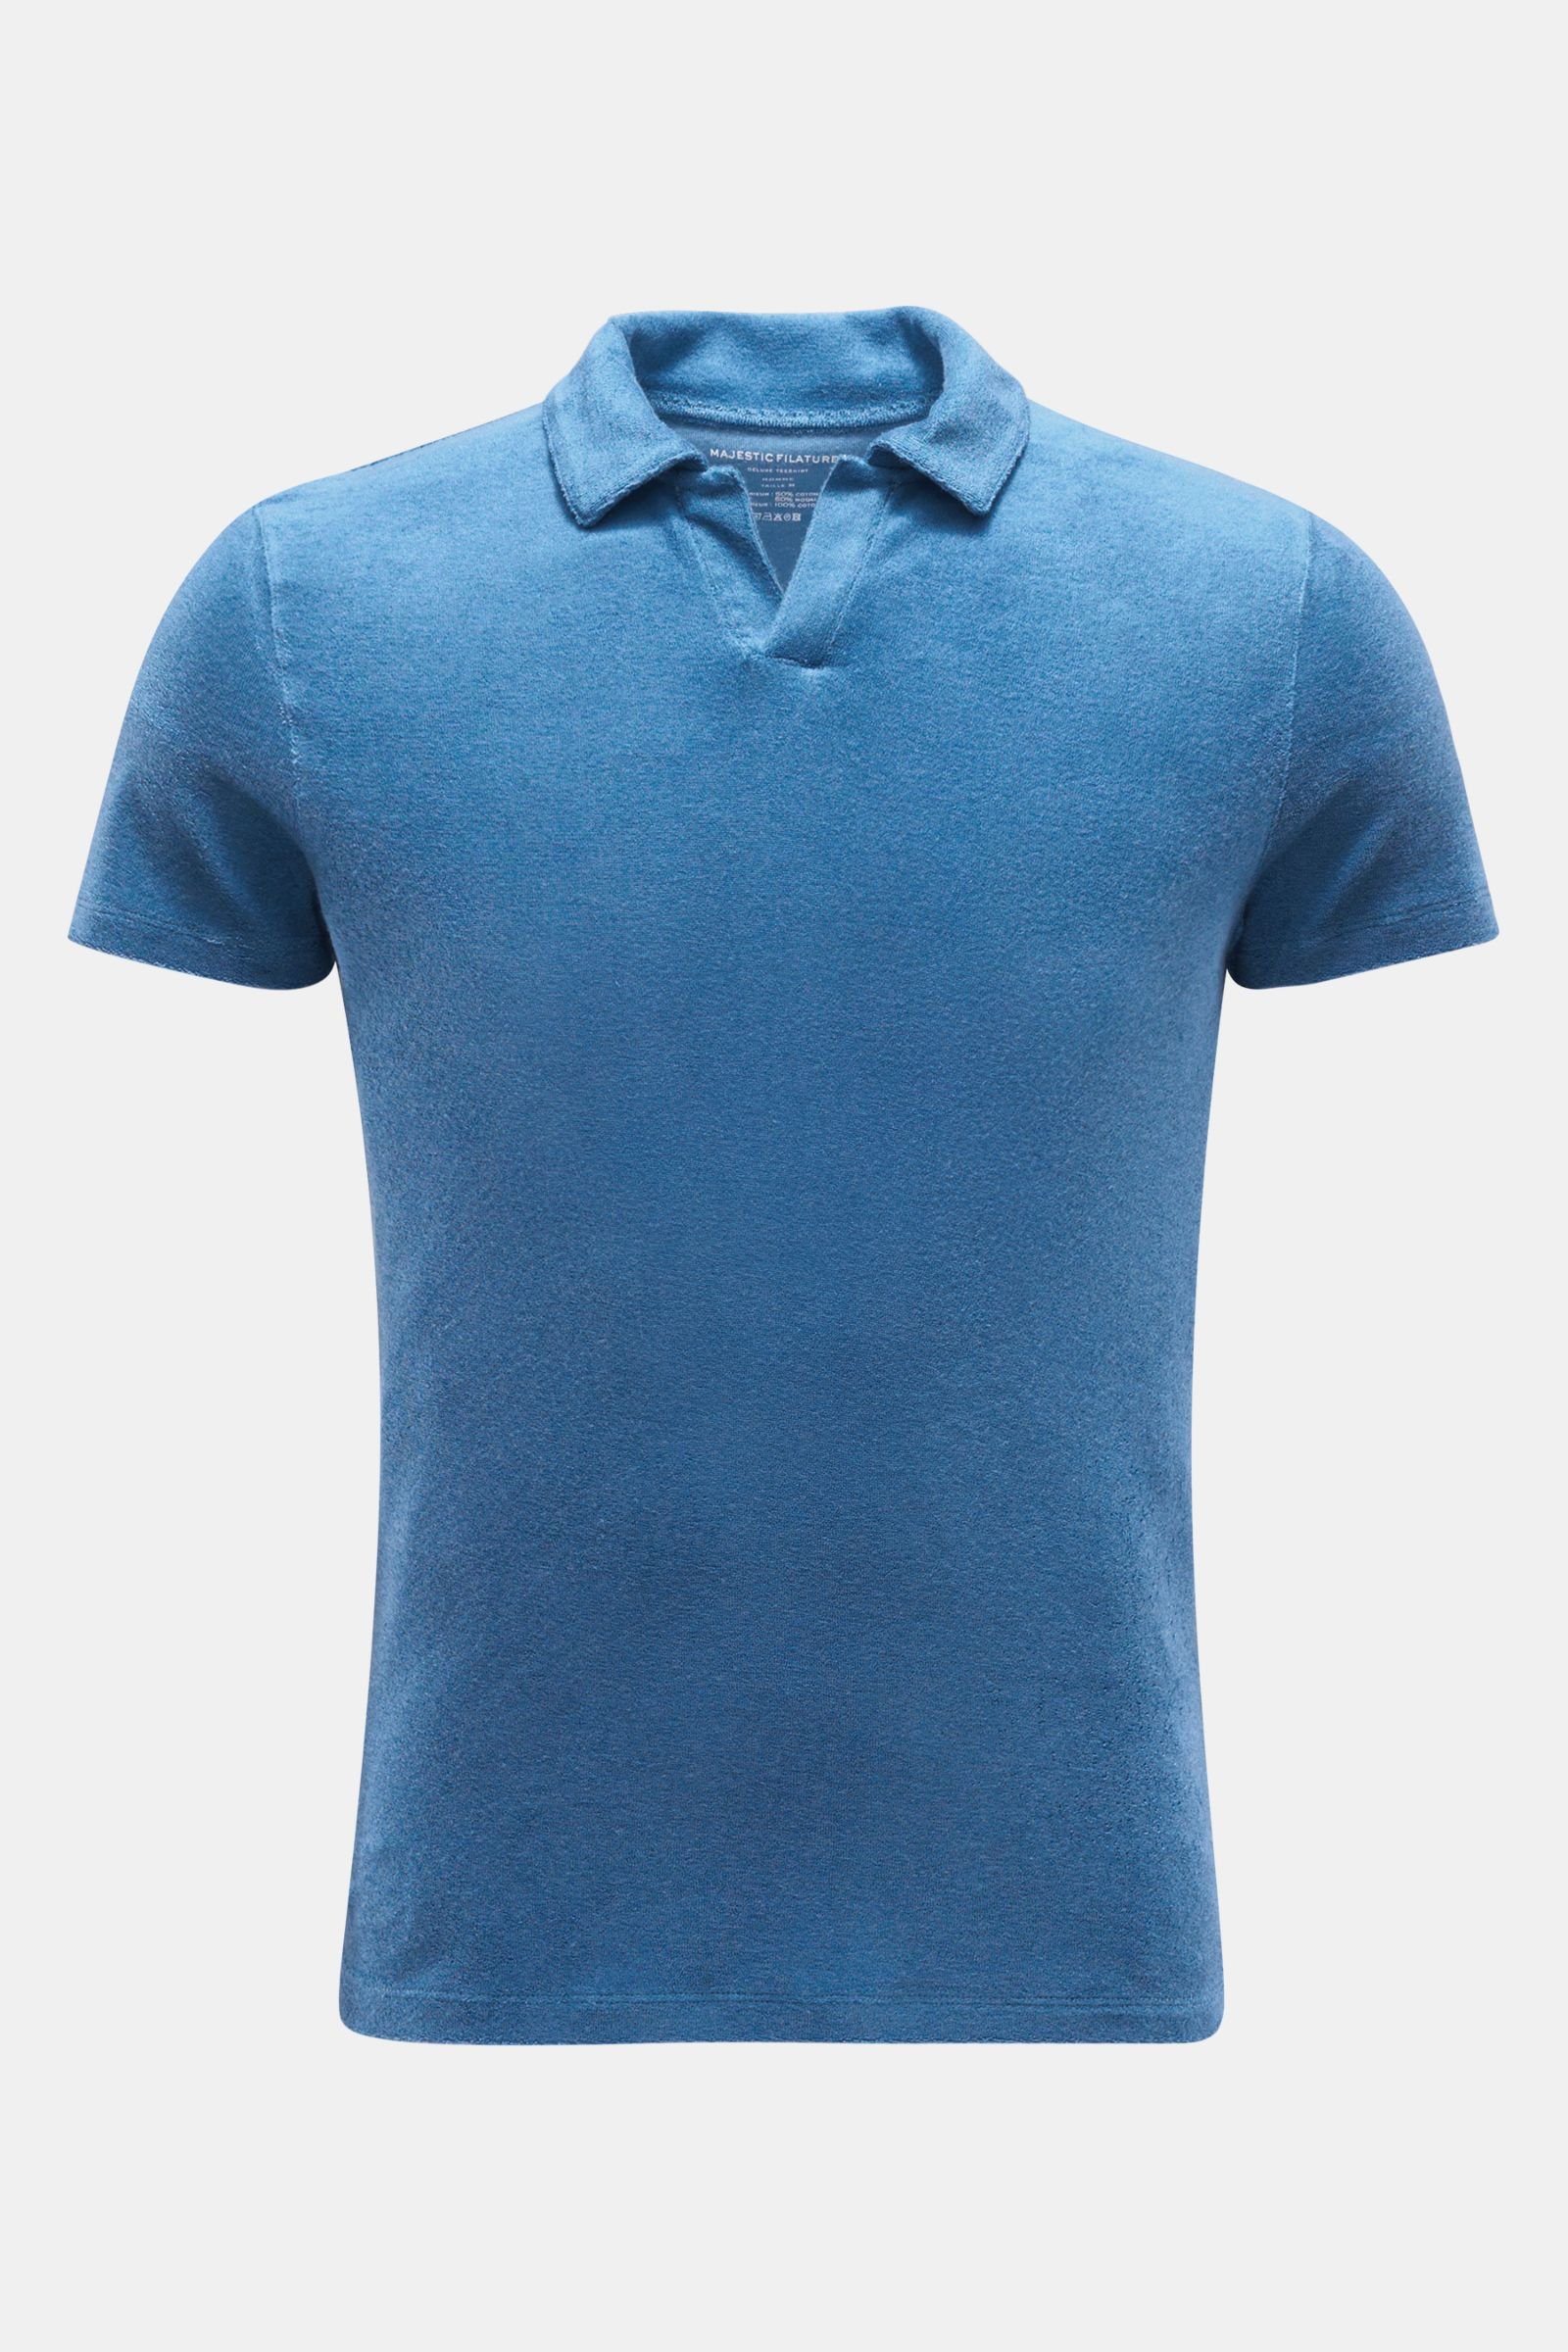 Terry polo shirt blue